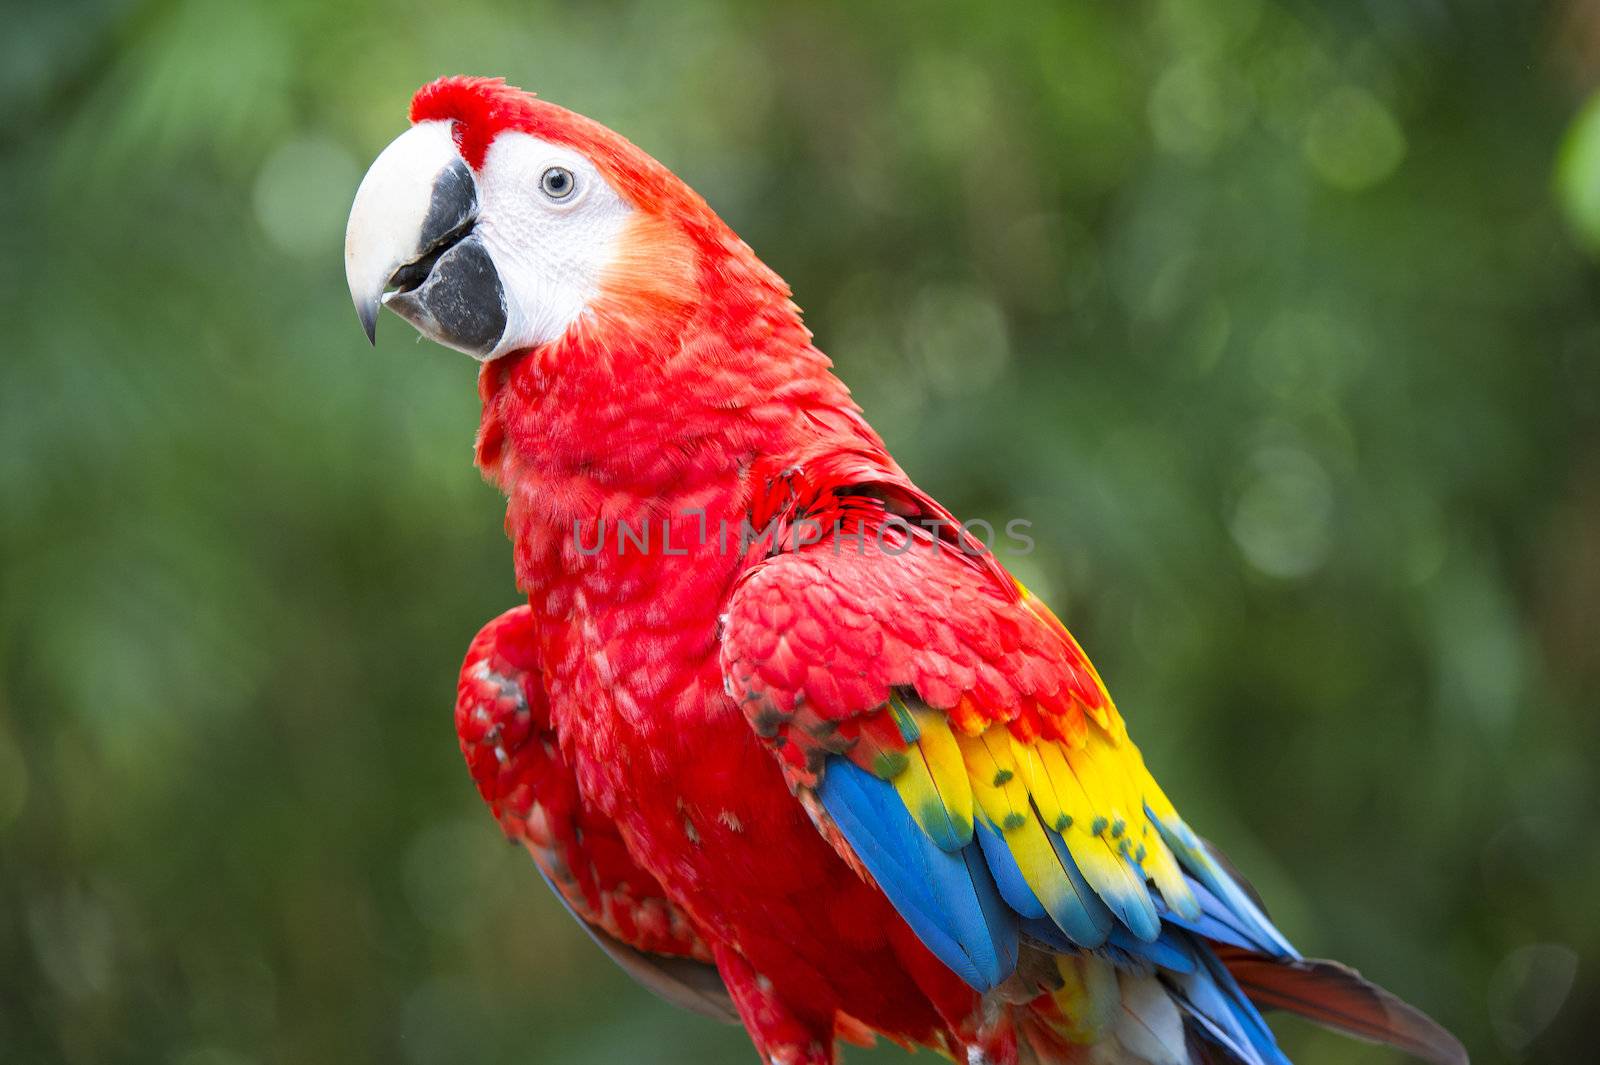 Hybrid Macaw in a blurred background